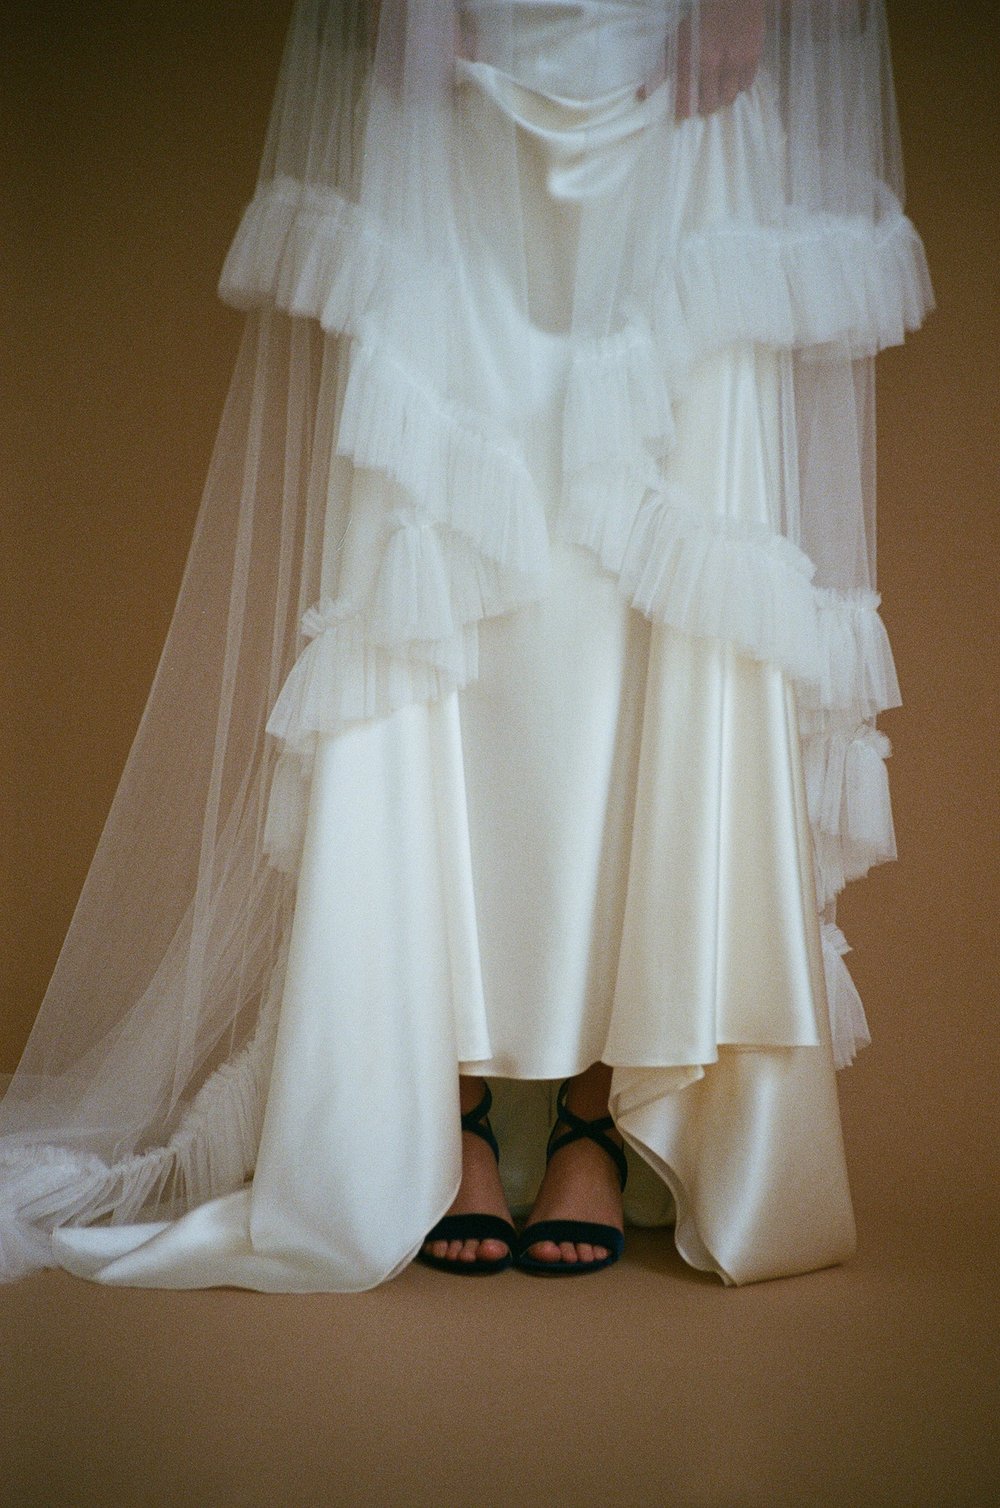 Analogue-shoot-Hollie-Cornish-photographer-Kate-Beaumont-wedding-gowns-Sheffield-32.jpg